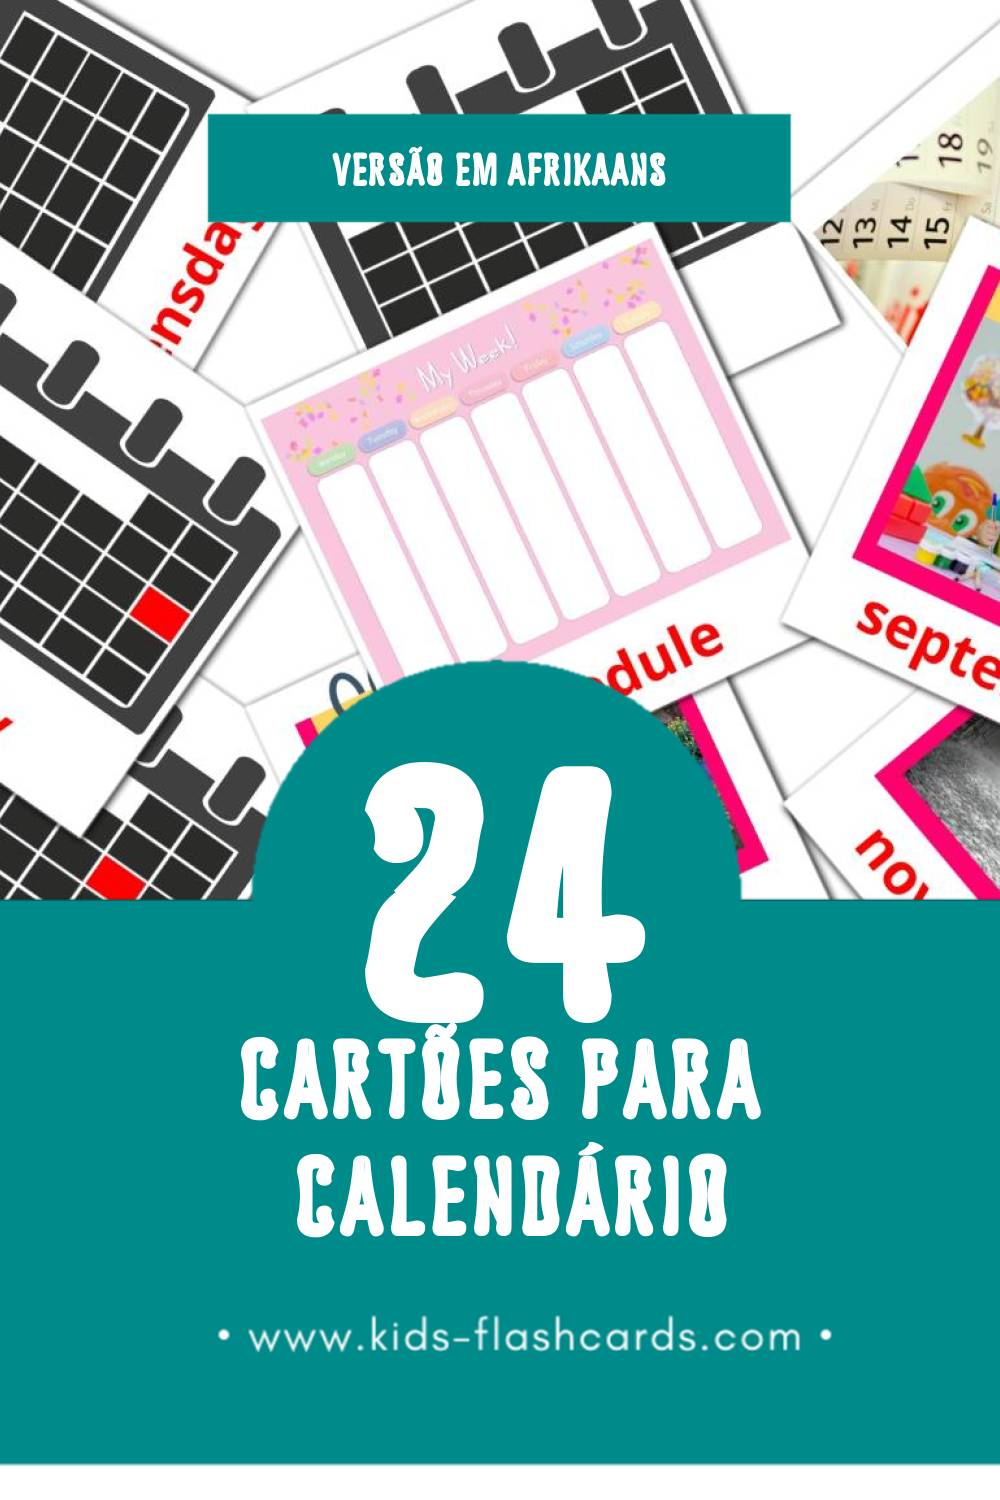 Flashcards de Kalender Visuais para Toddlers (24 cartões em Afrikaans)